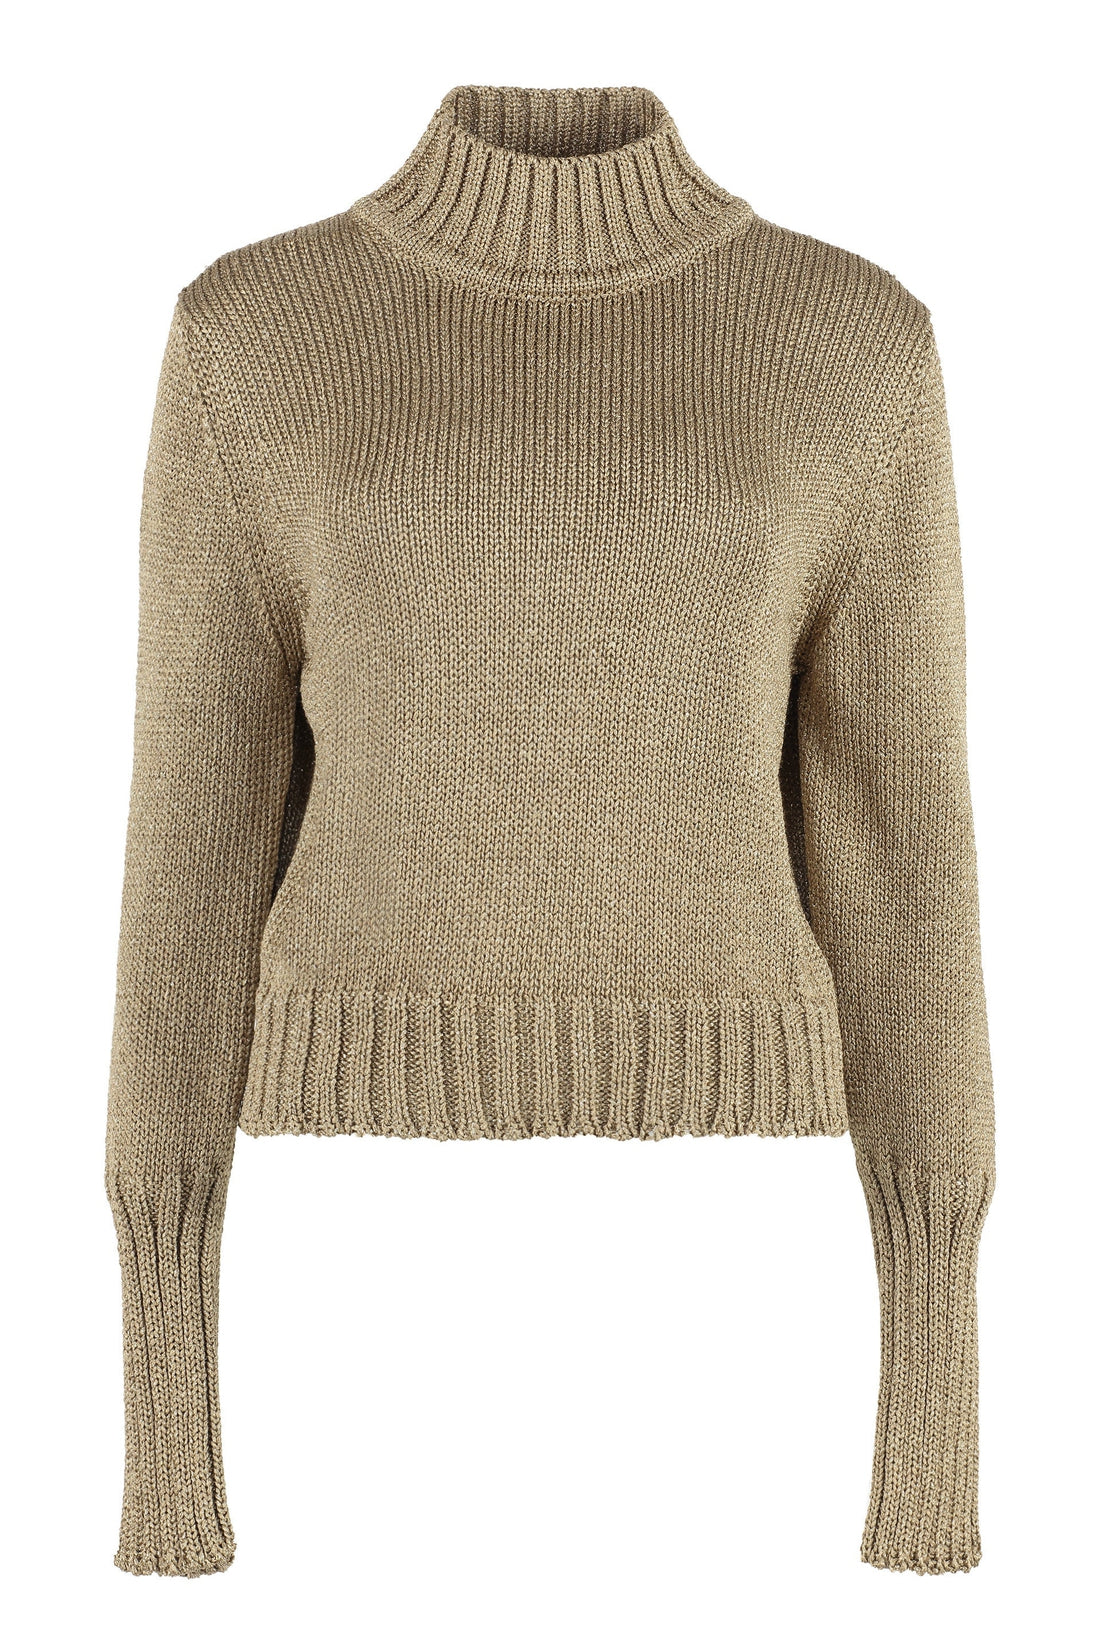 BOSS-OUTLET-SALE-Lurex knit sweater-ARCHIVIST